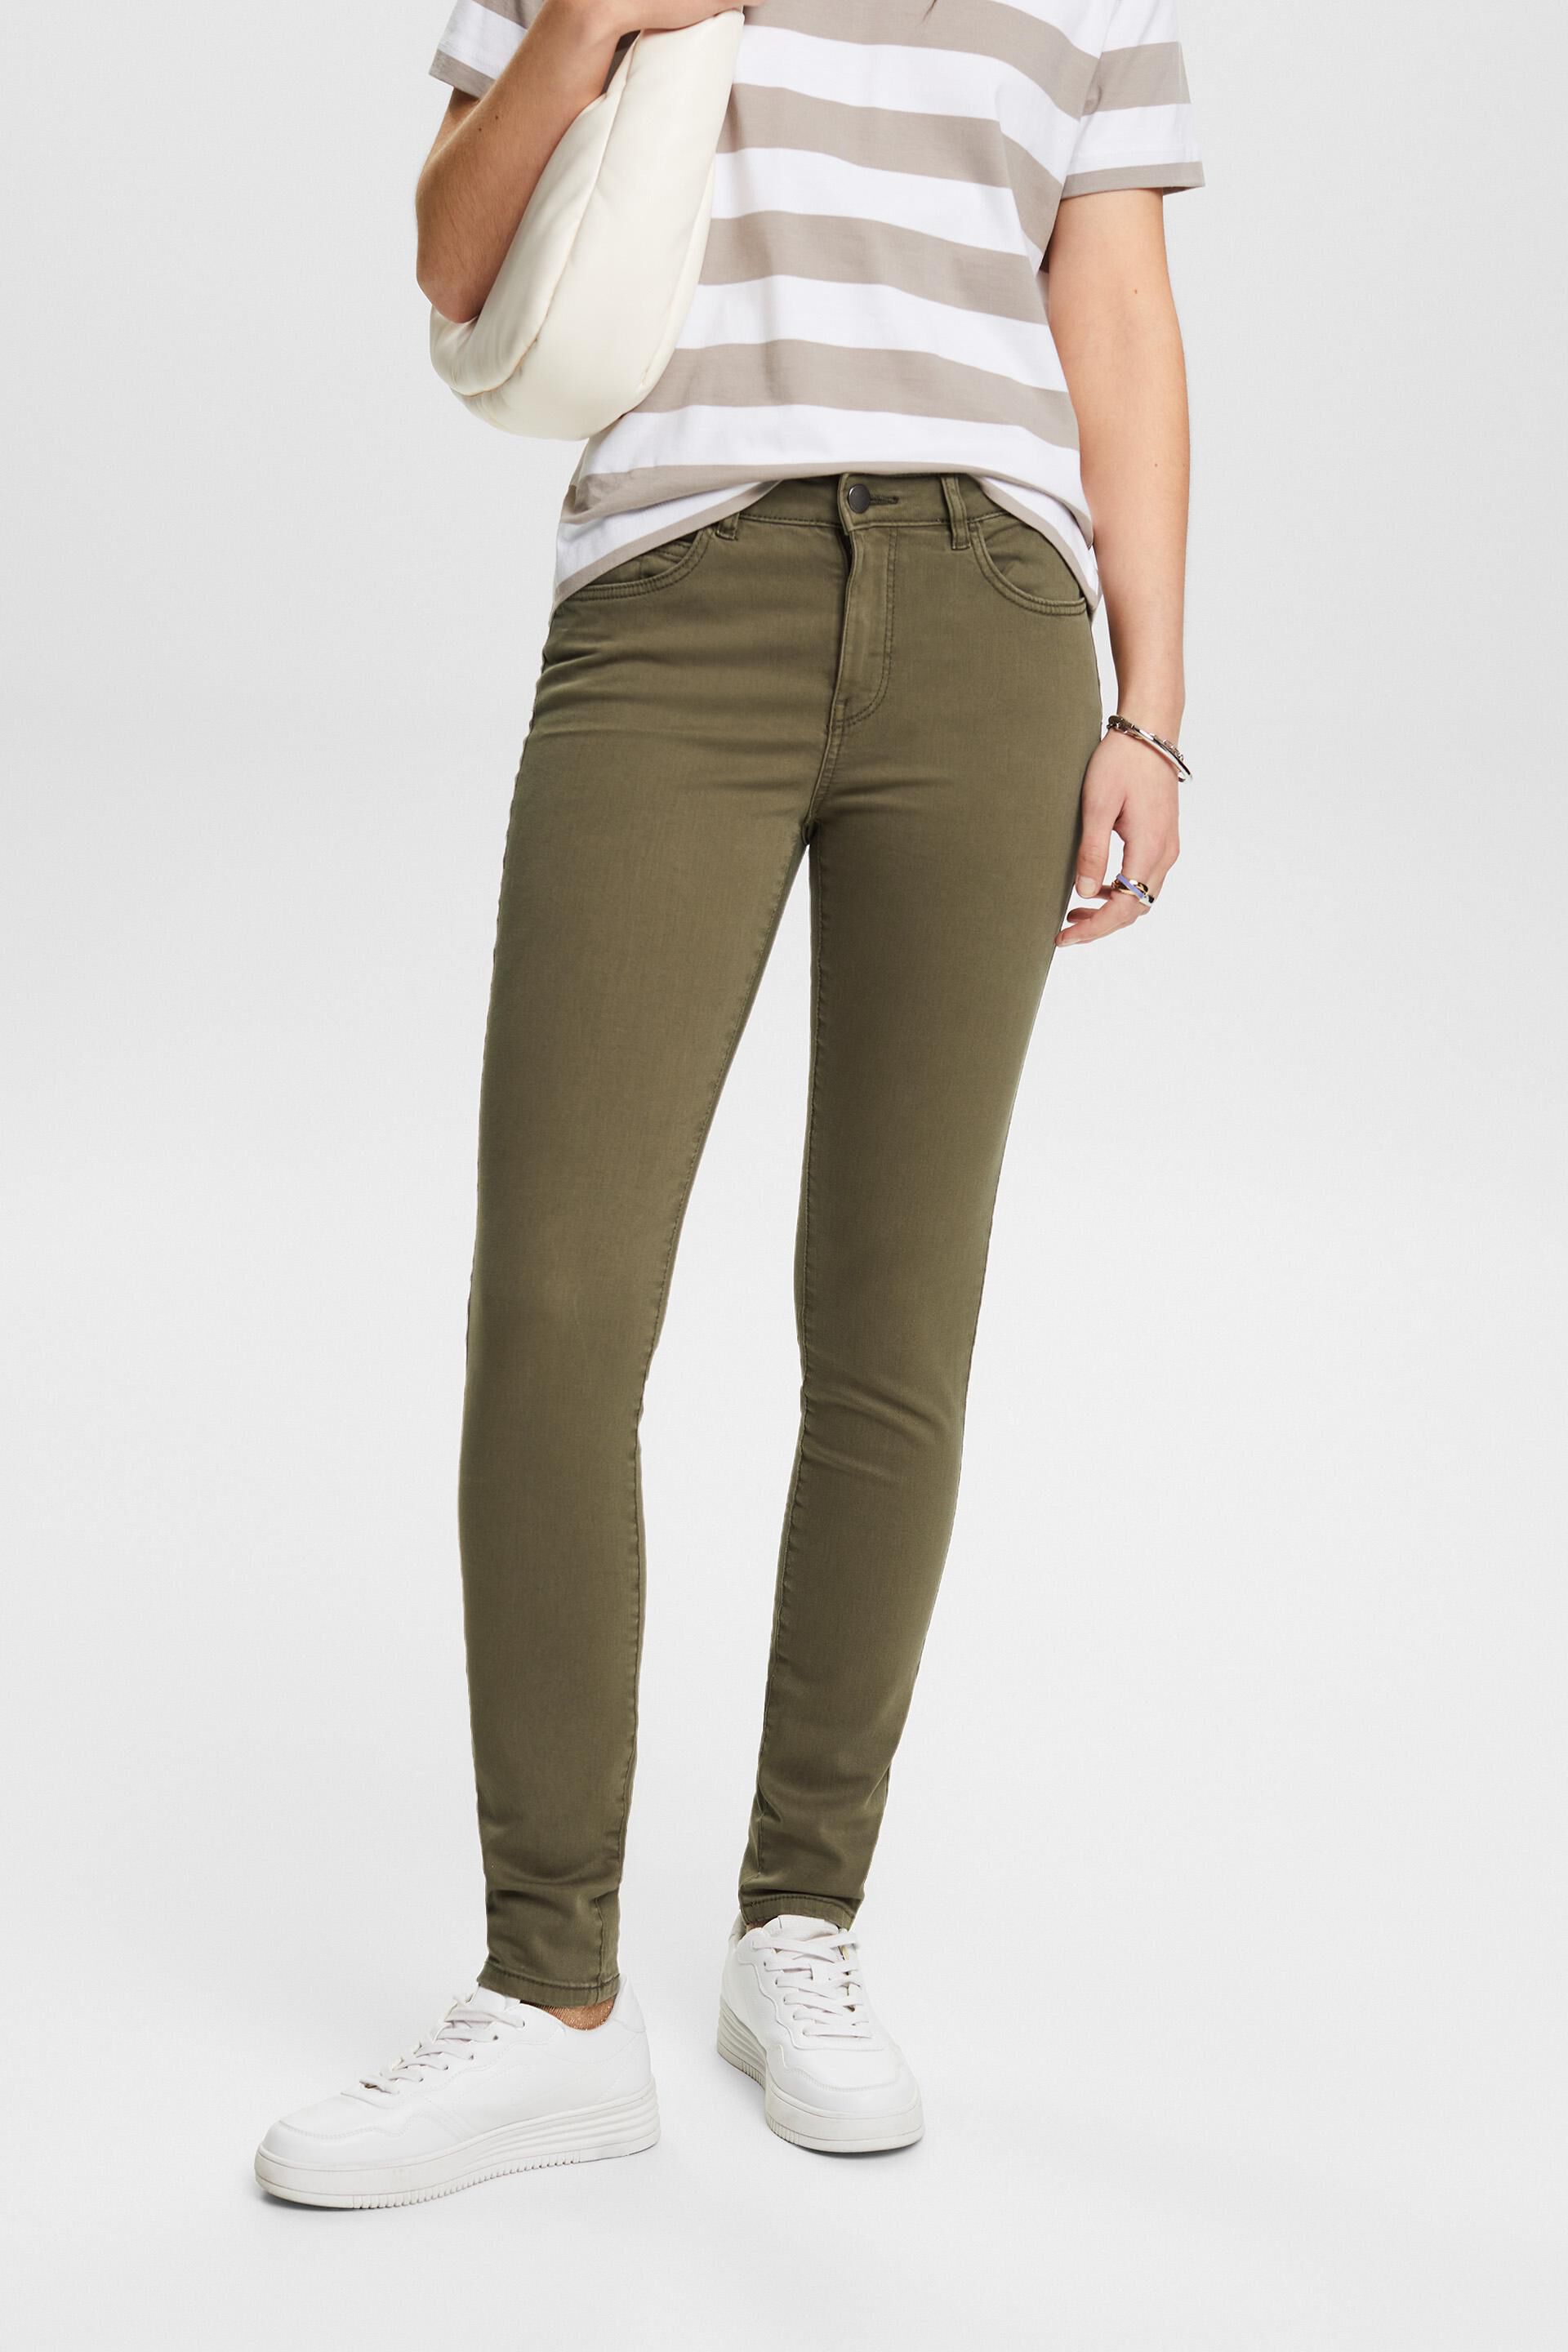 Amazon.com: Women Fashion Clothing organic cotton pants unique trousers  wide leg pants (Black) : Handmade Products